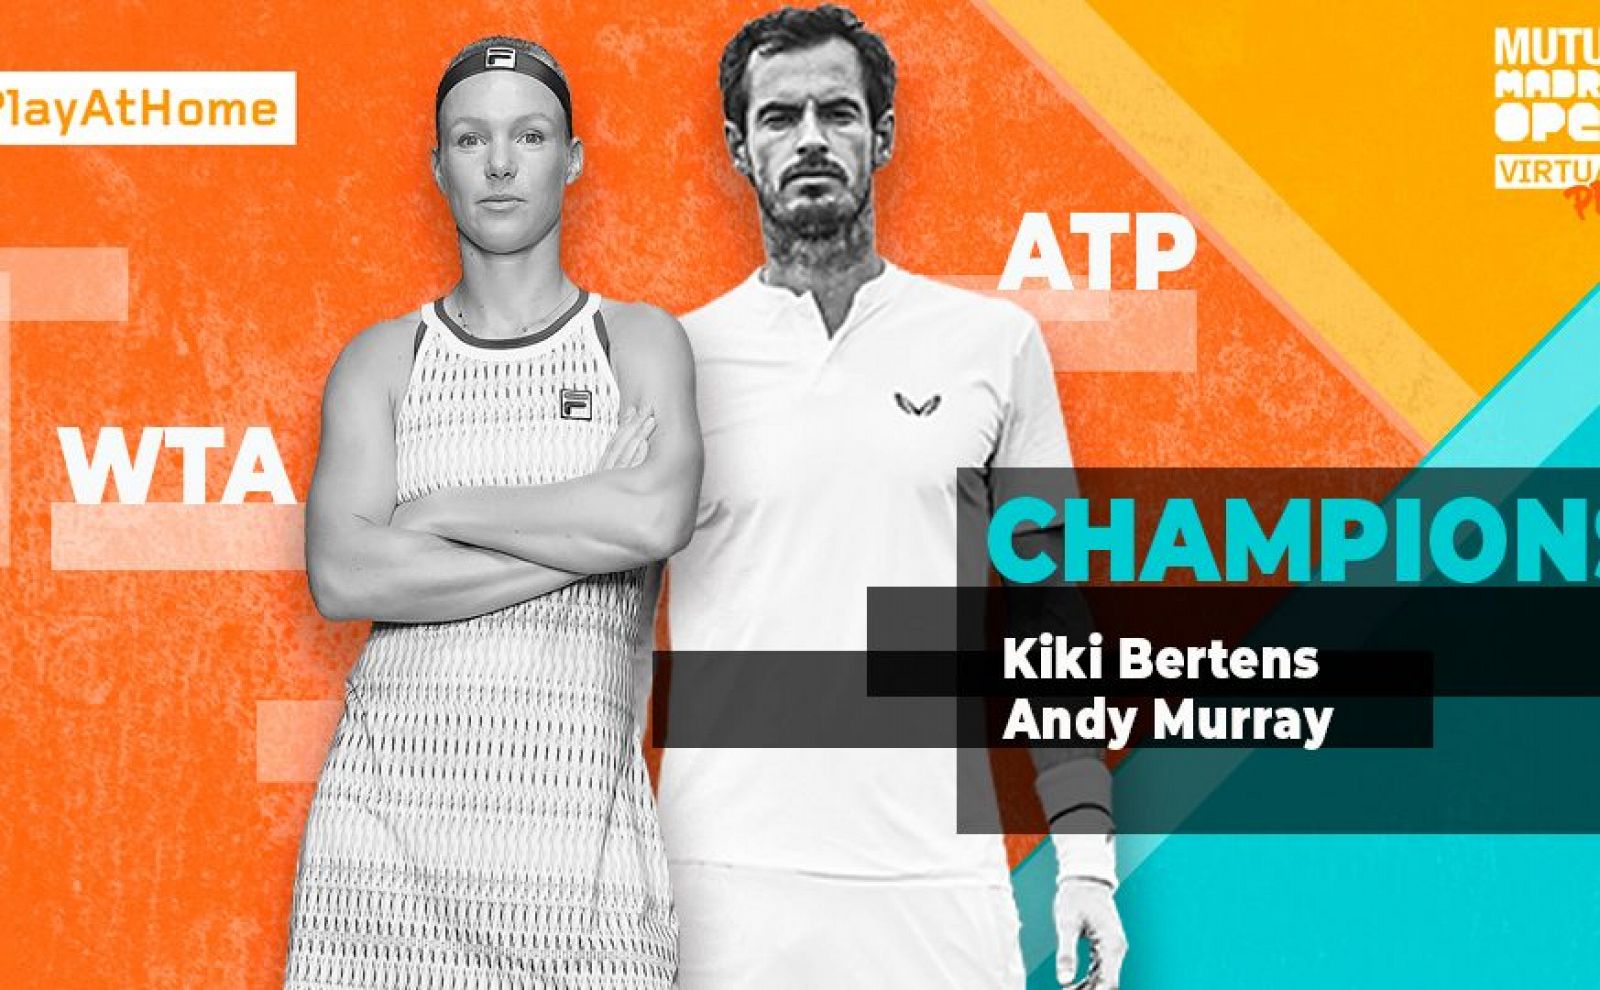 Imagen d elos dos vencedores del Mutua Madrid Open Virtual Pro: Andy Murray y Kiki Bertens.